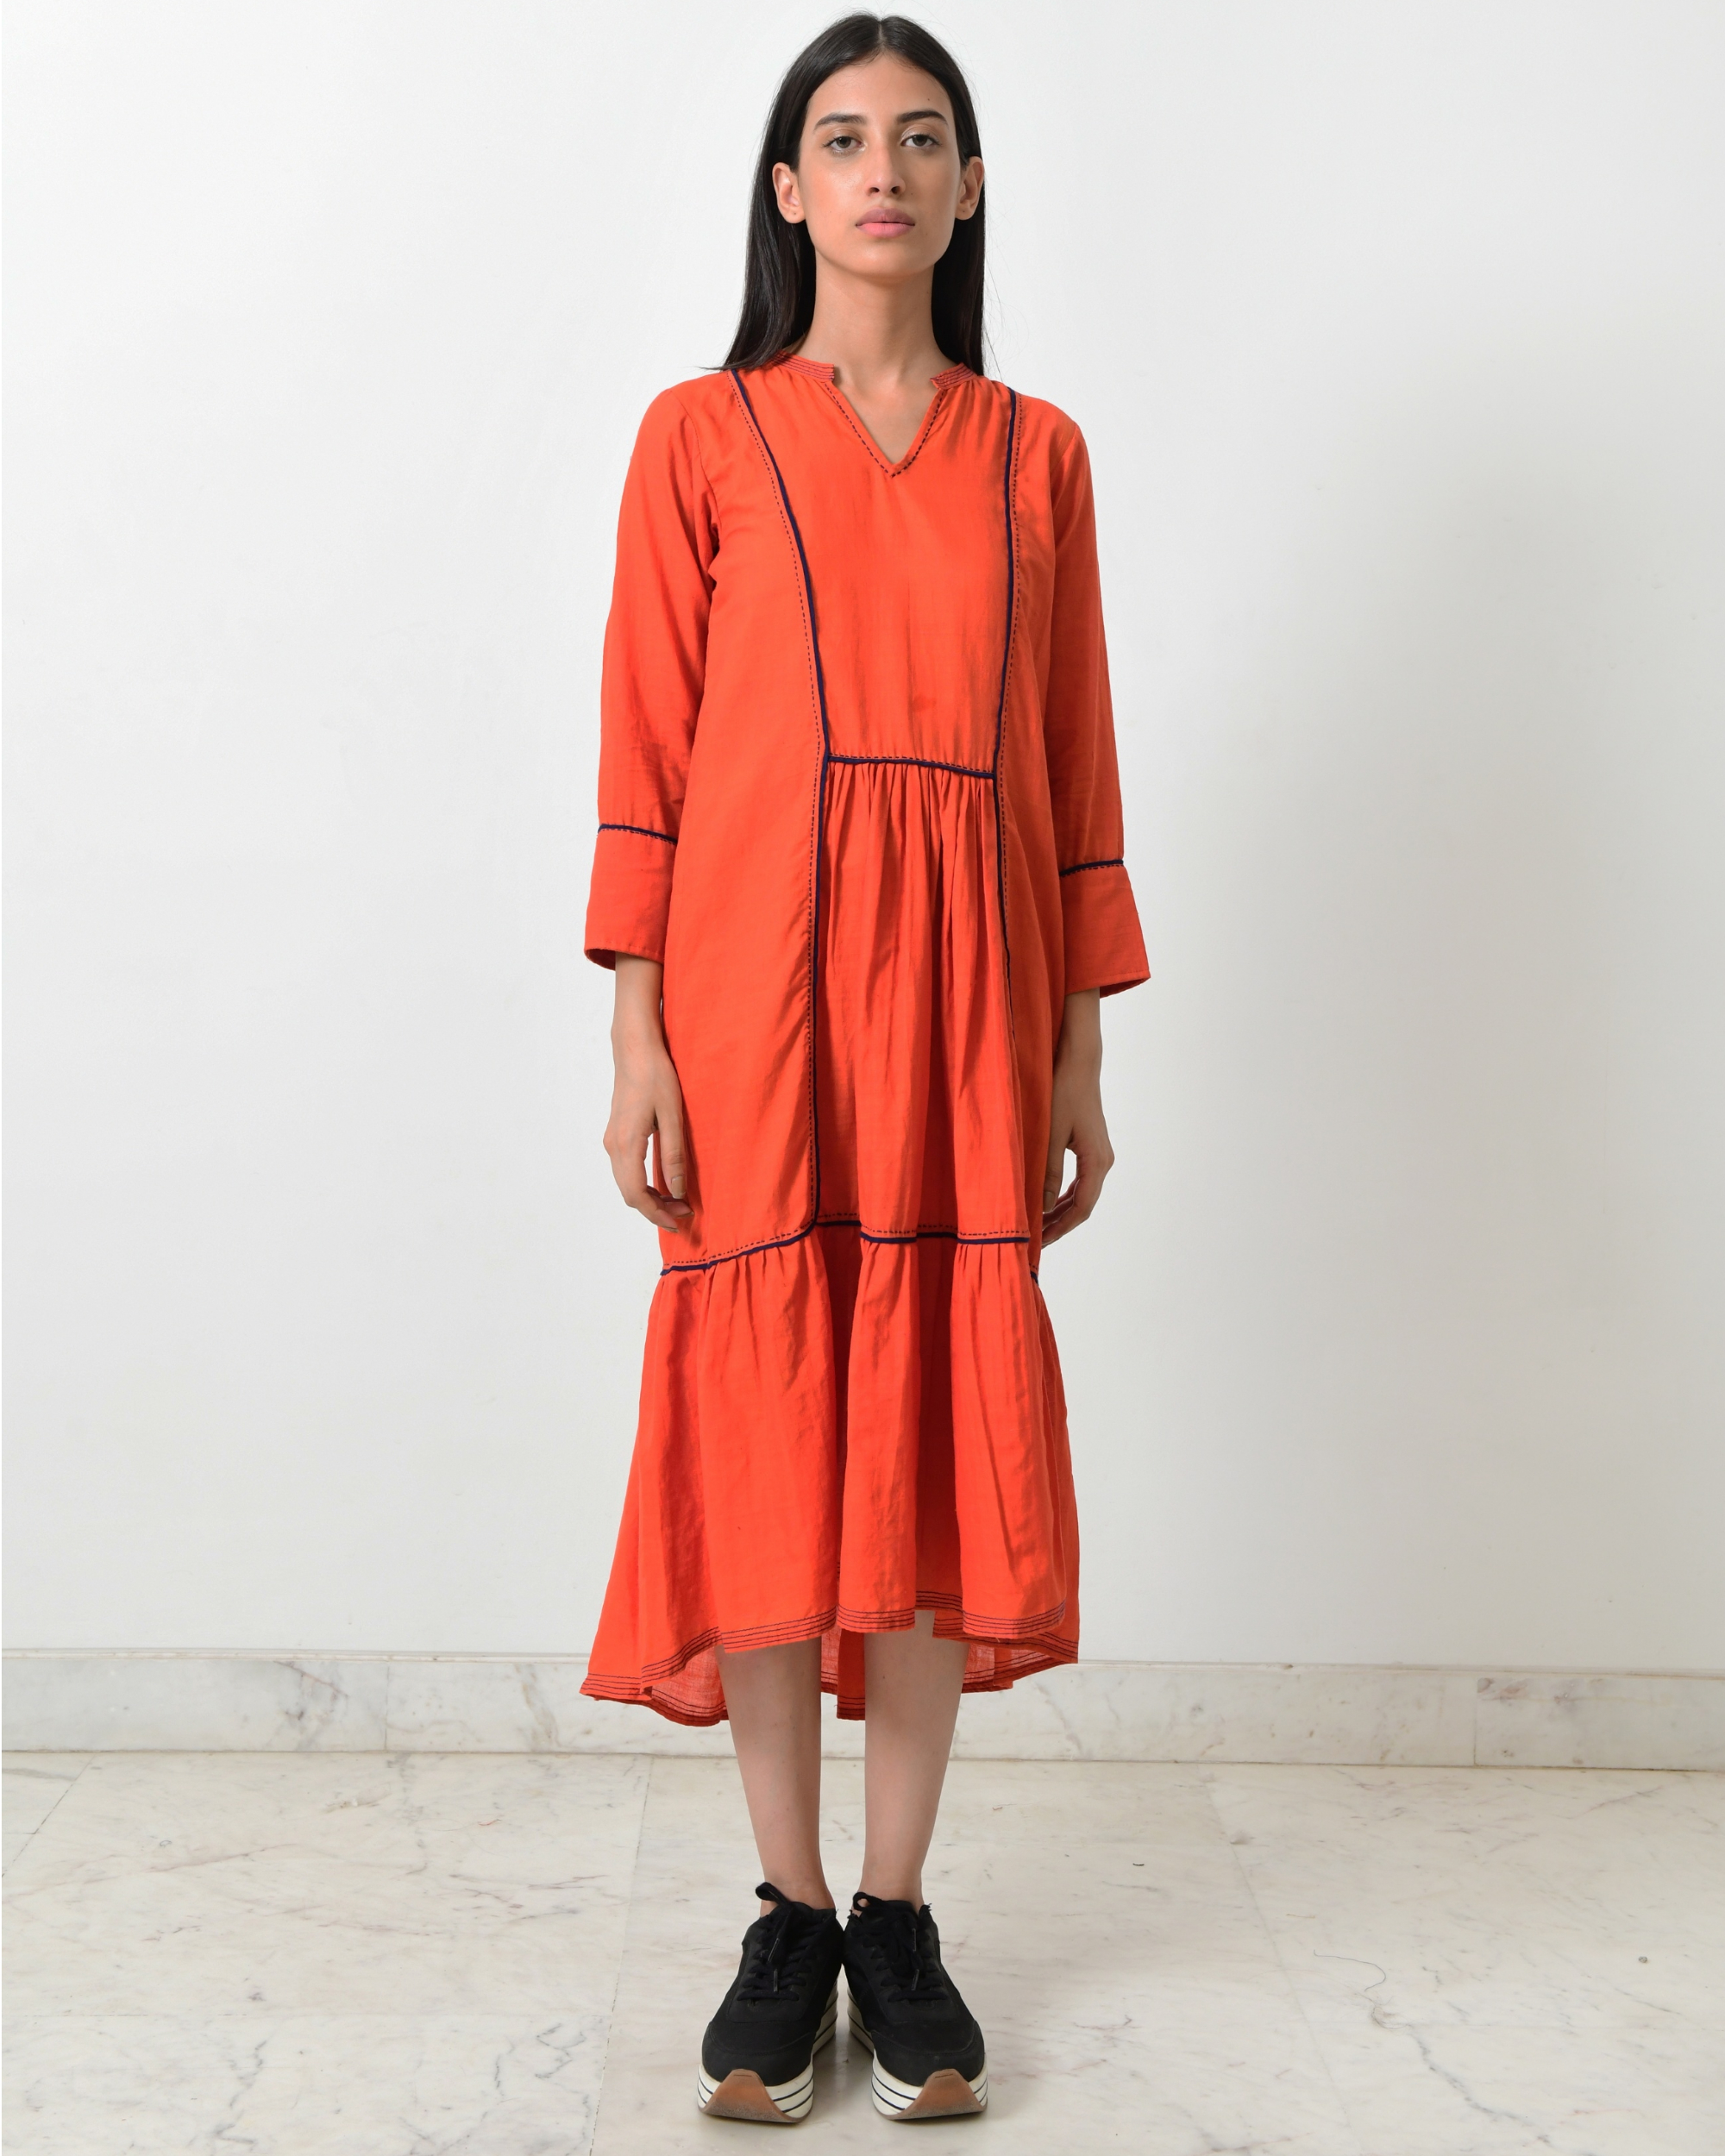 Rustic orange high low gathered midi dress by Rias | The Secret Label